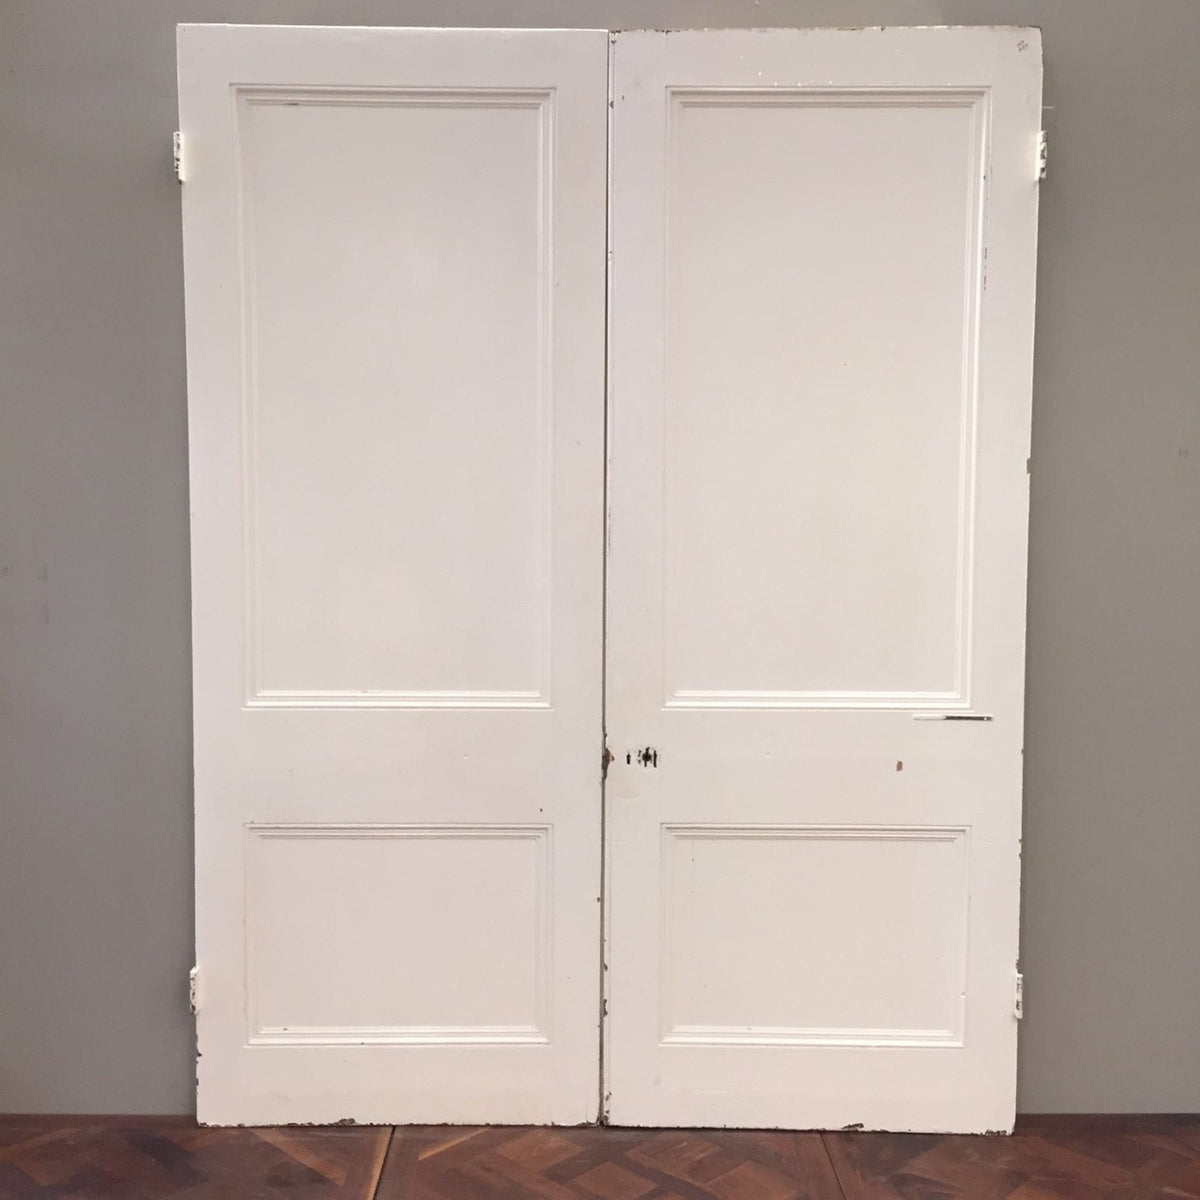 Antique Pine Double Doors | The Architectural Forum